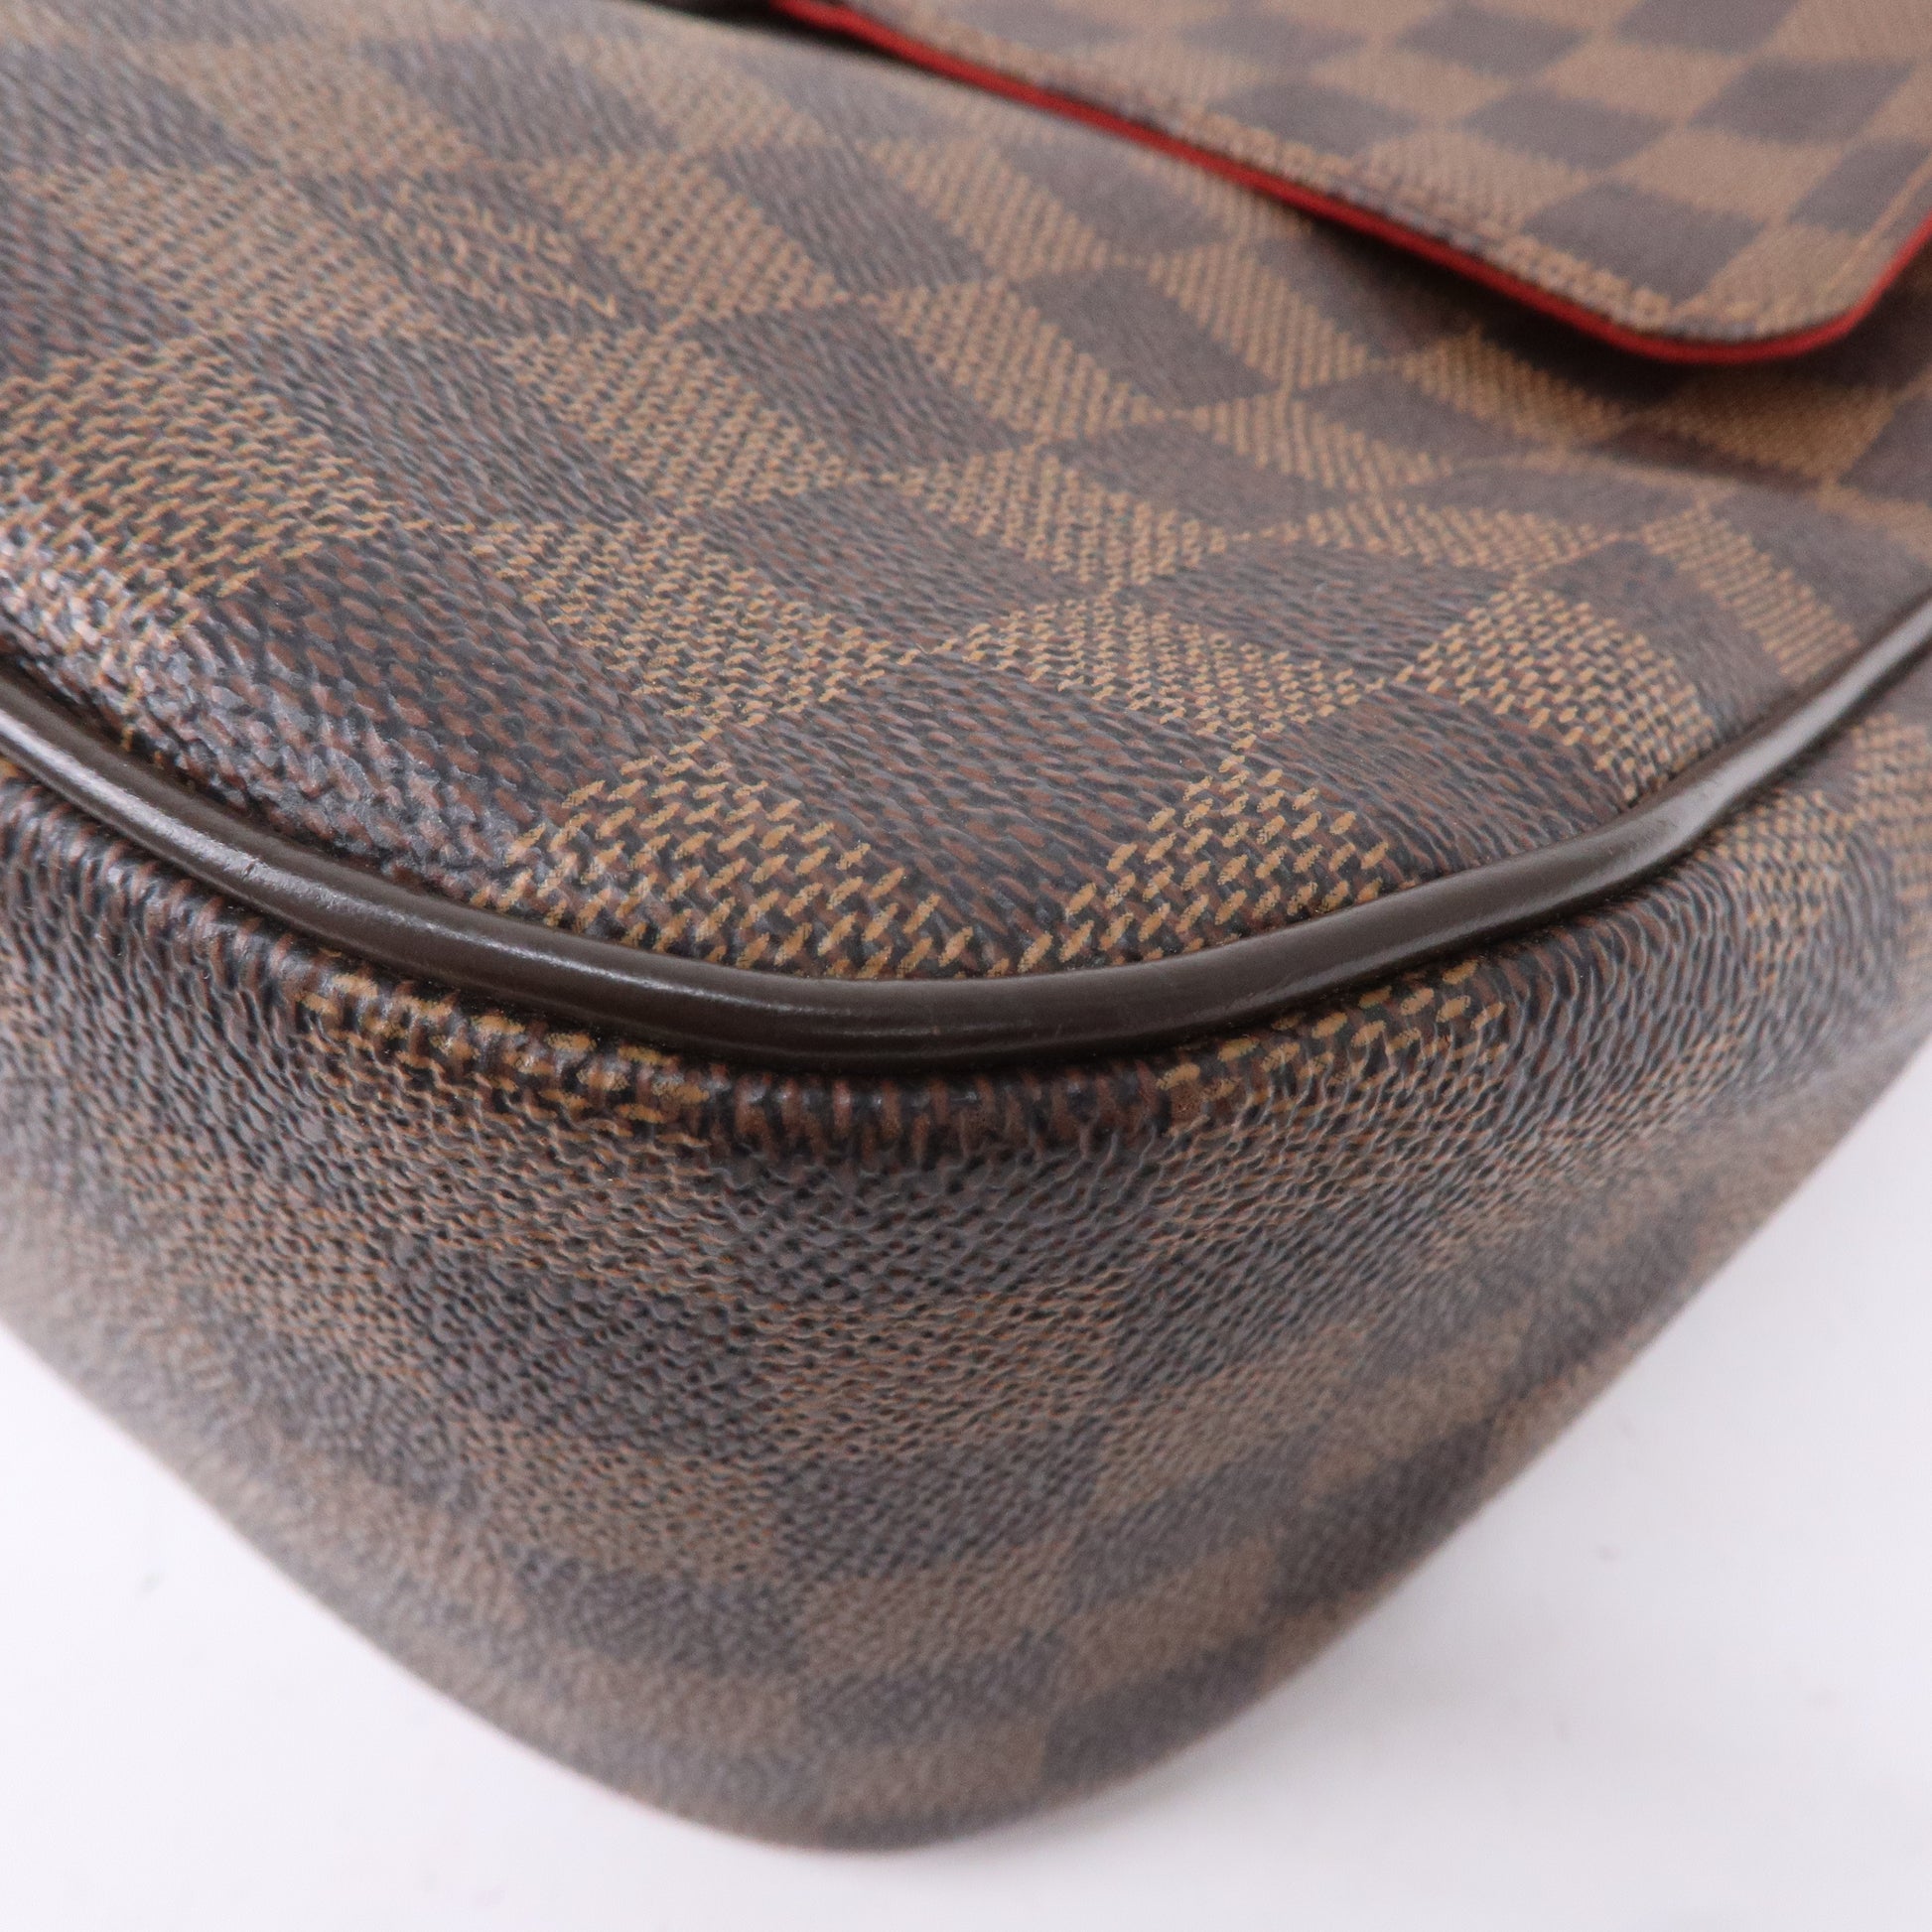 Auth Louis Vuitton Damier Ebene Besace Rosebery Shoulder Bag N41178 Used